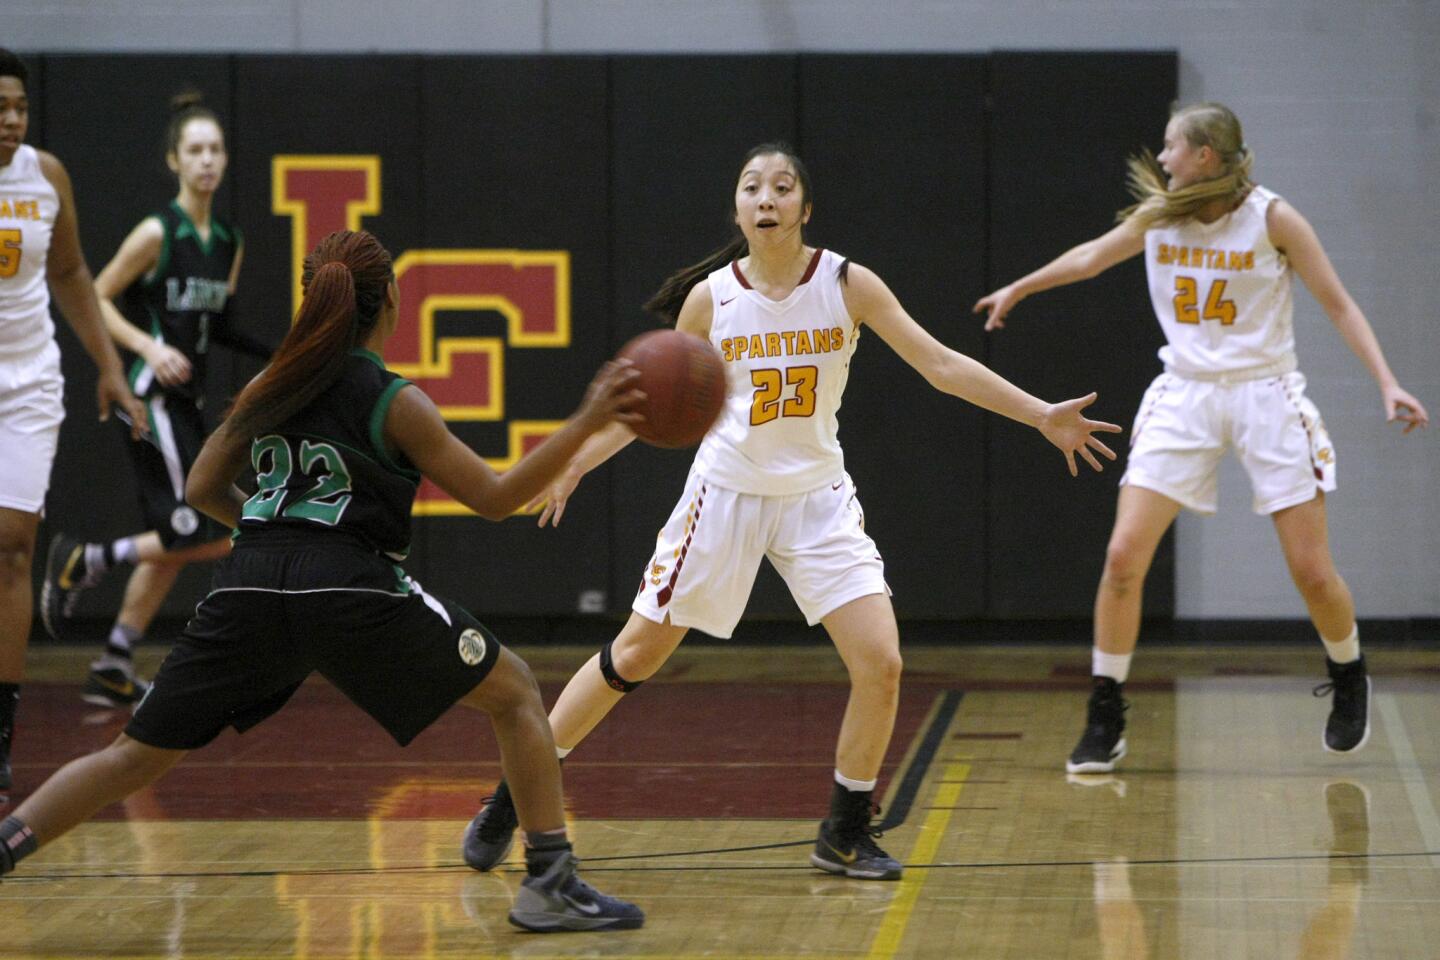 Photo Gallery: La Cañada High School girls basketball vs. Thousands Oaks High School